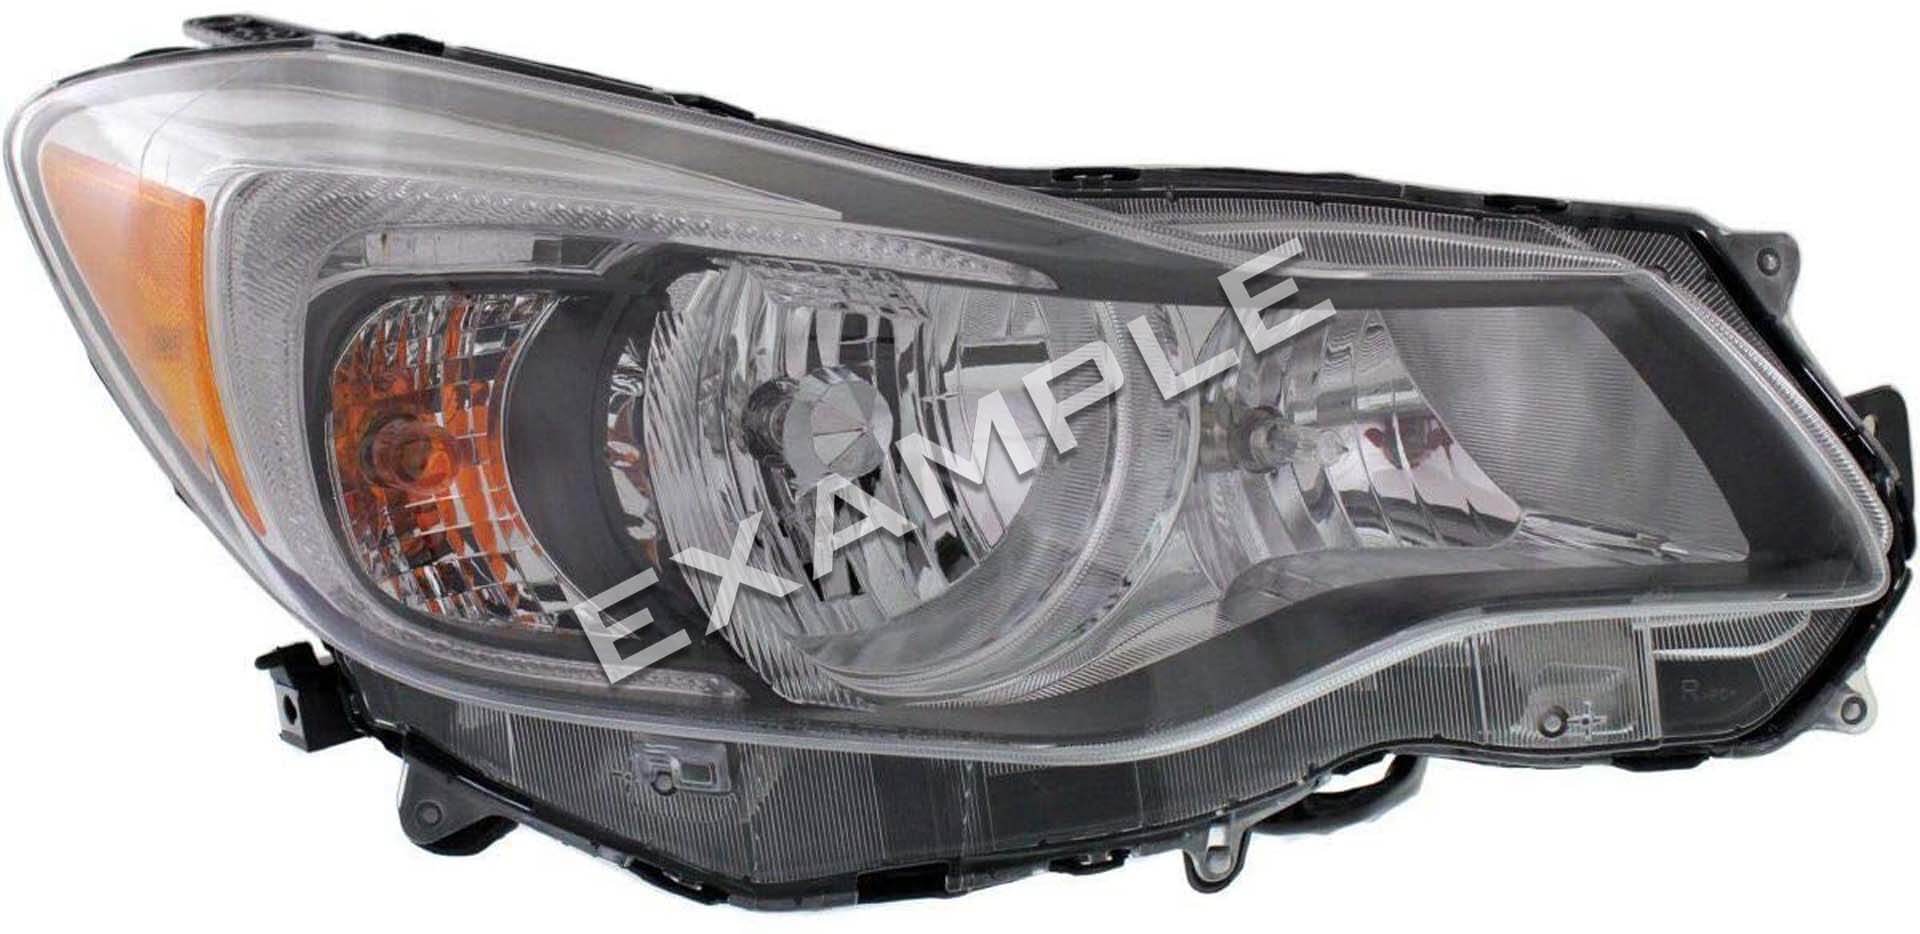 Subaru Impreza IV 12-18 Bi-LED light upgrade retrofit kit for halogen headlights